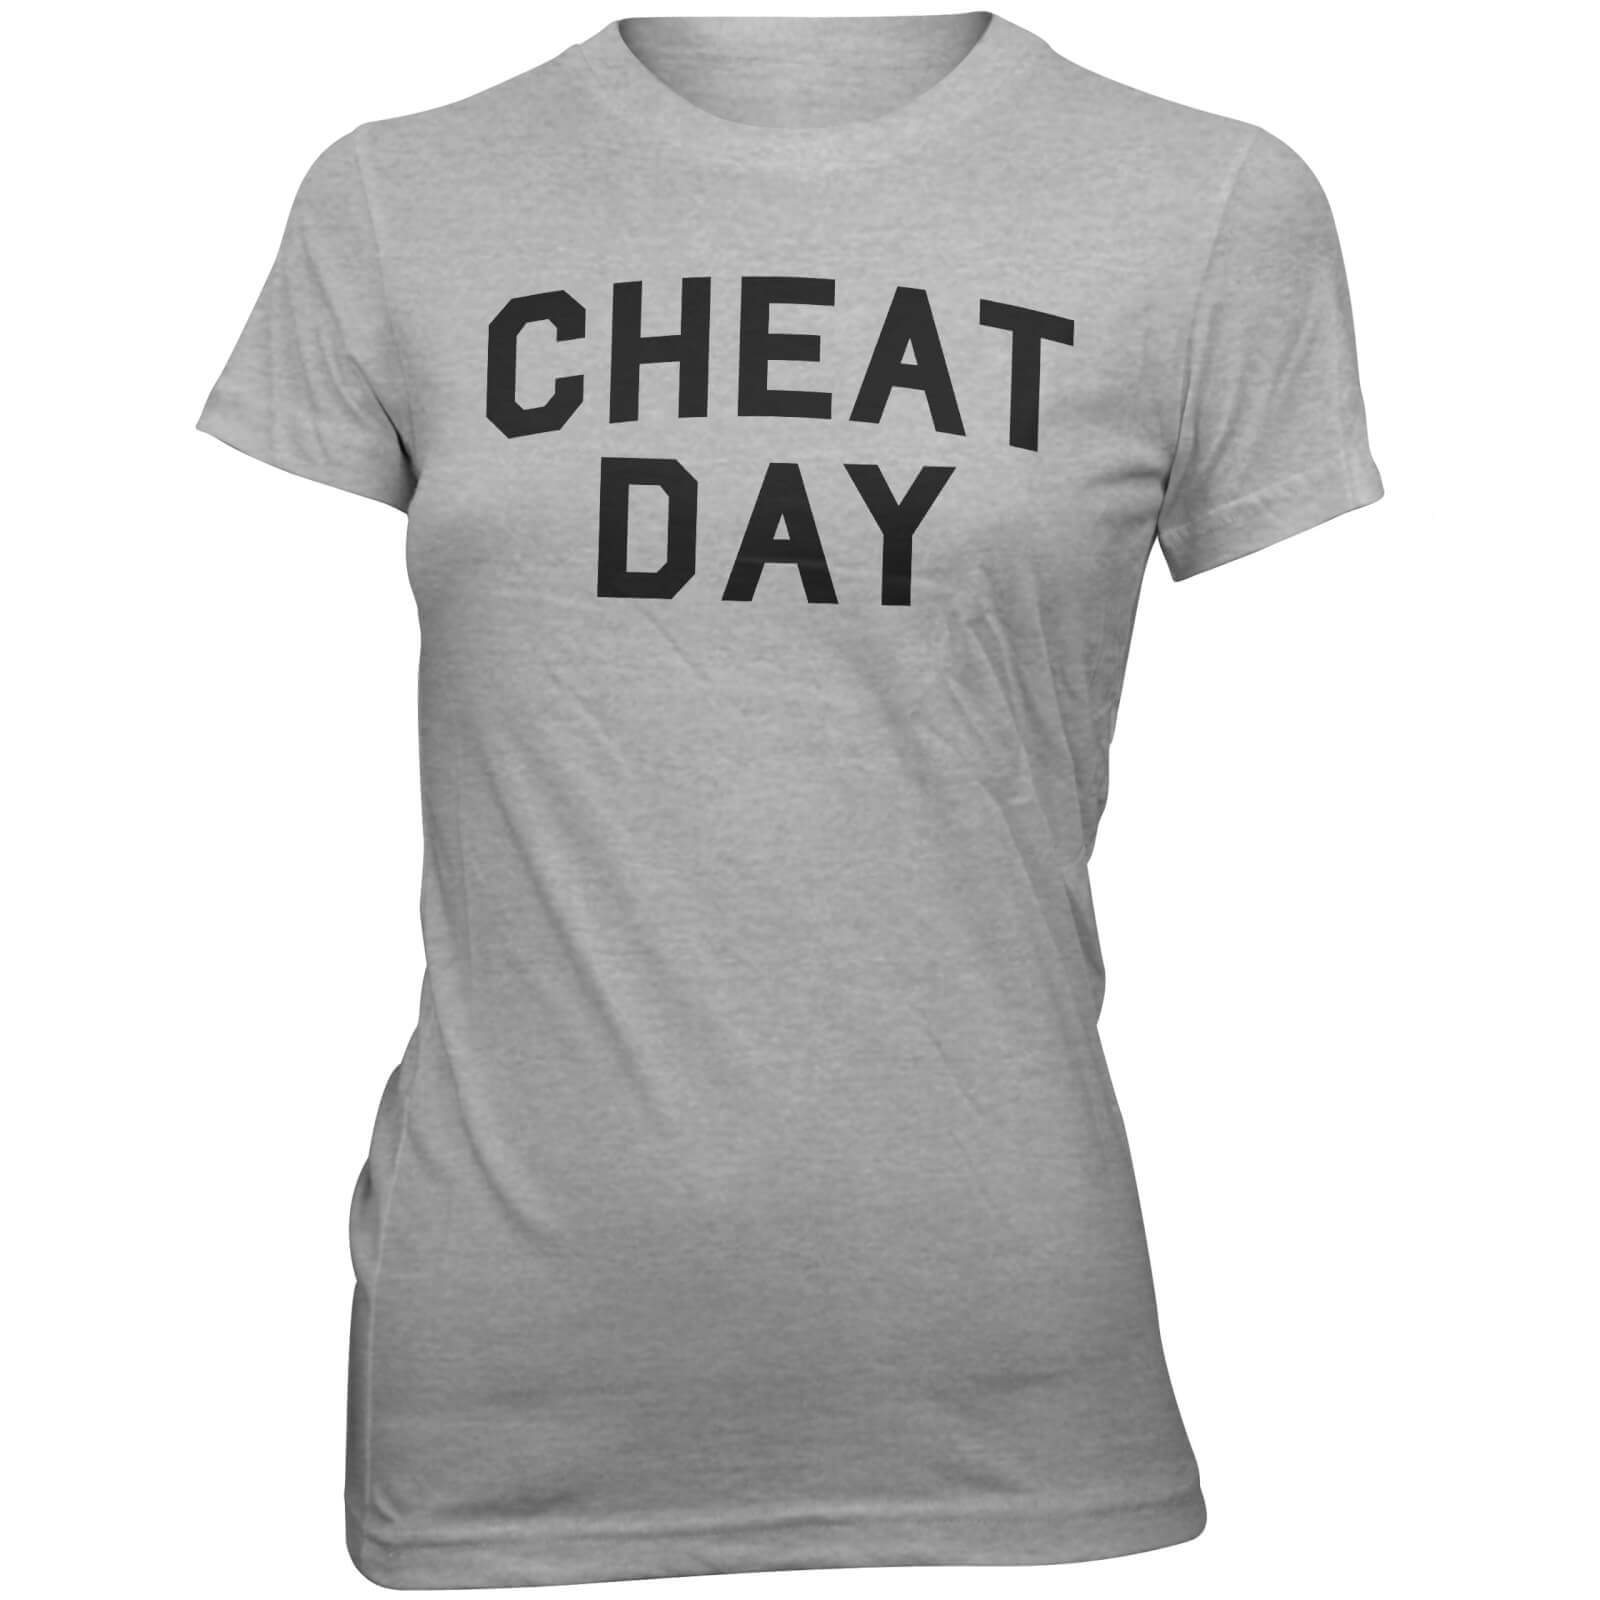 Cheat Day Women's Slogan T-Shirt - S - Grey